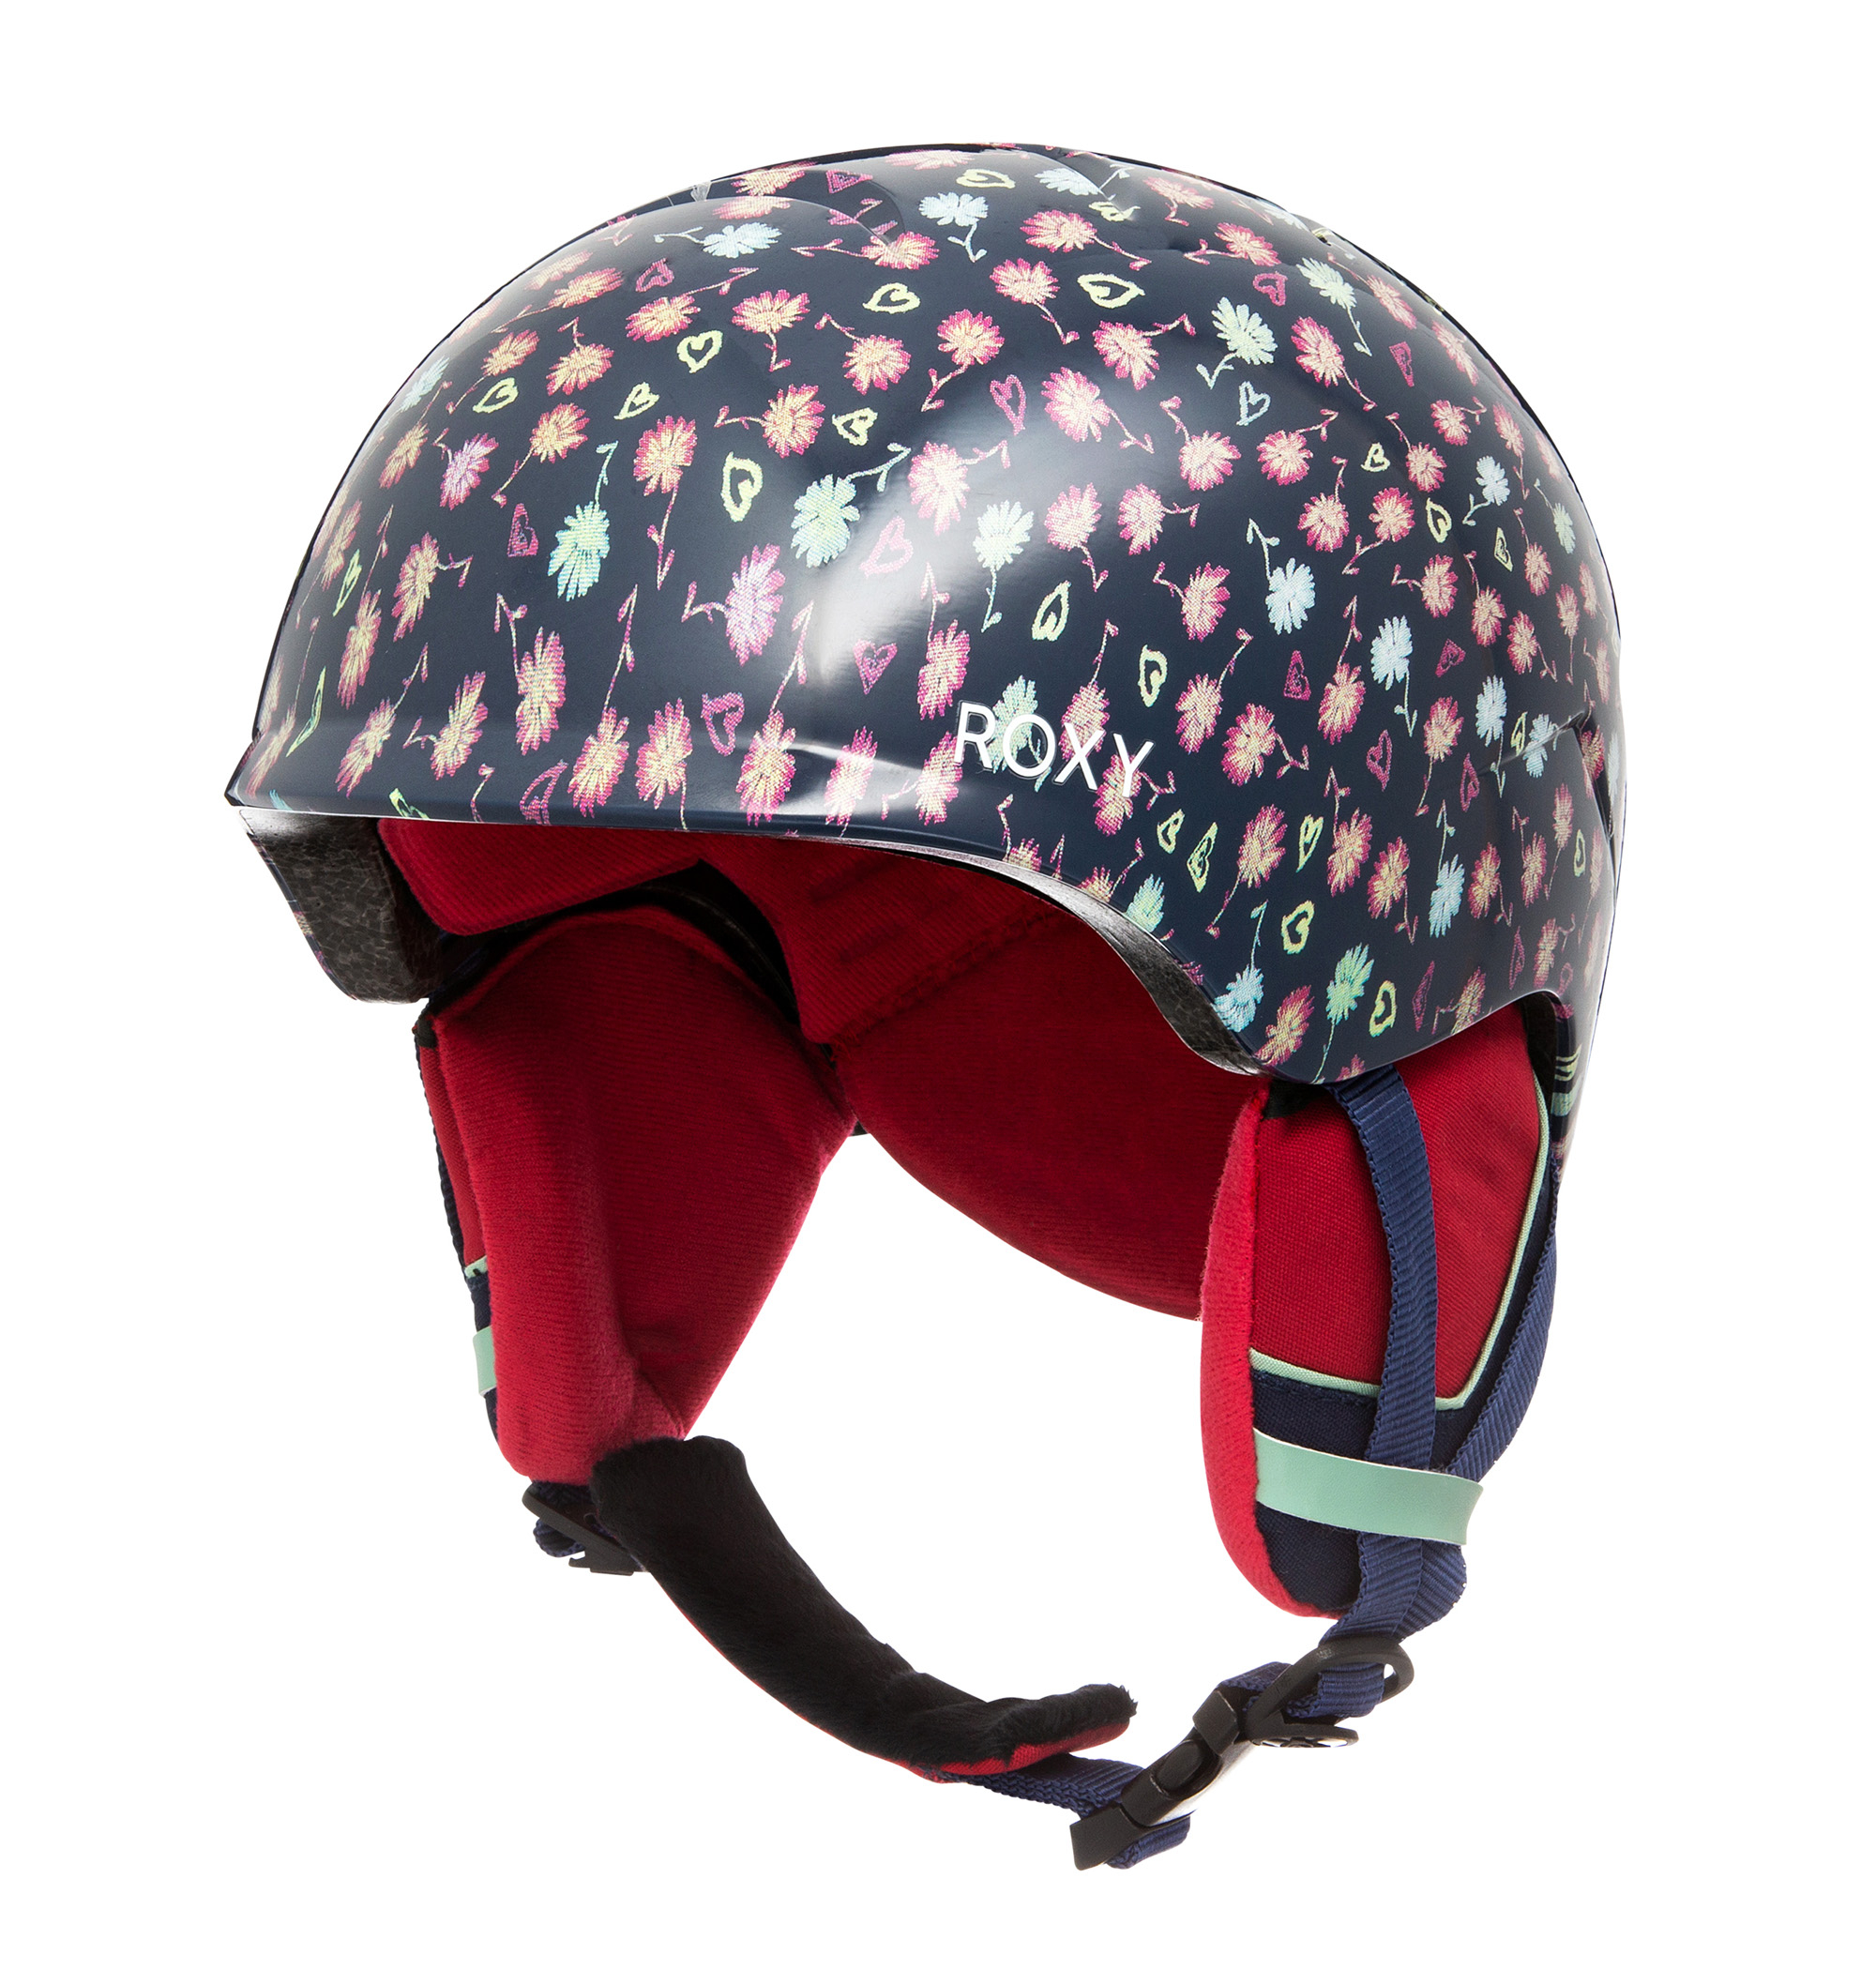 30%OFF！＜Roxy＞SLUSH GIRL 長時間の着用でも疲れにくい軽量インモールド構造のヘルメット画像